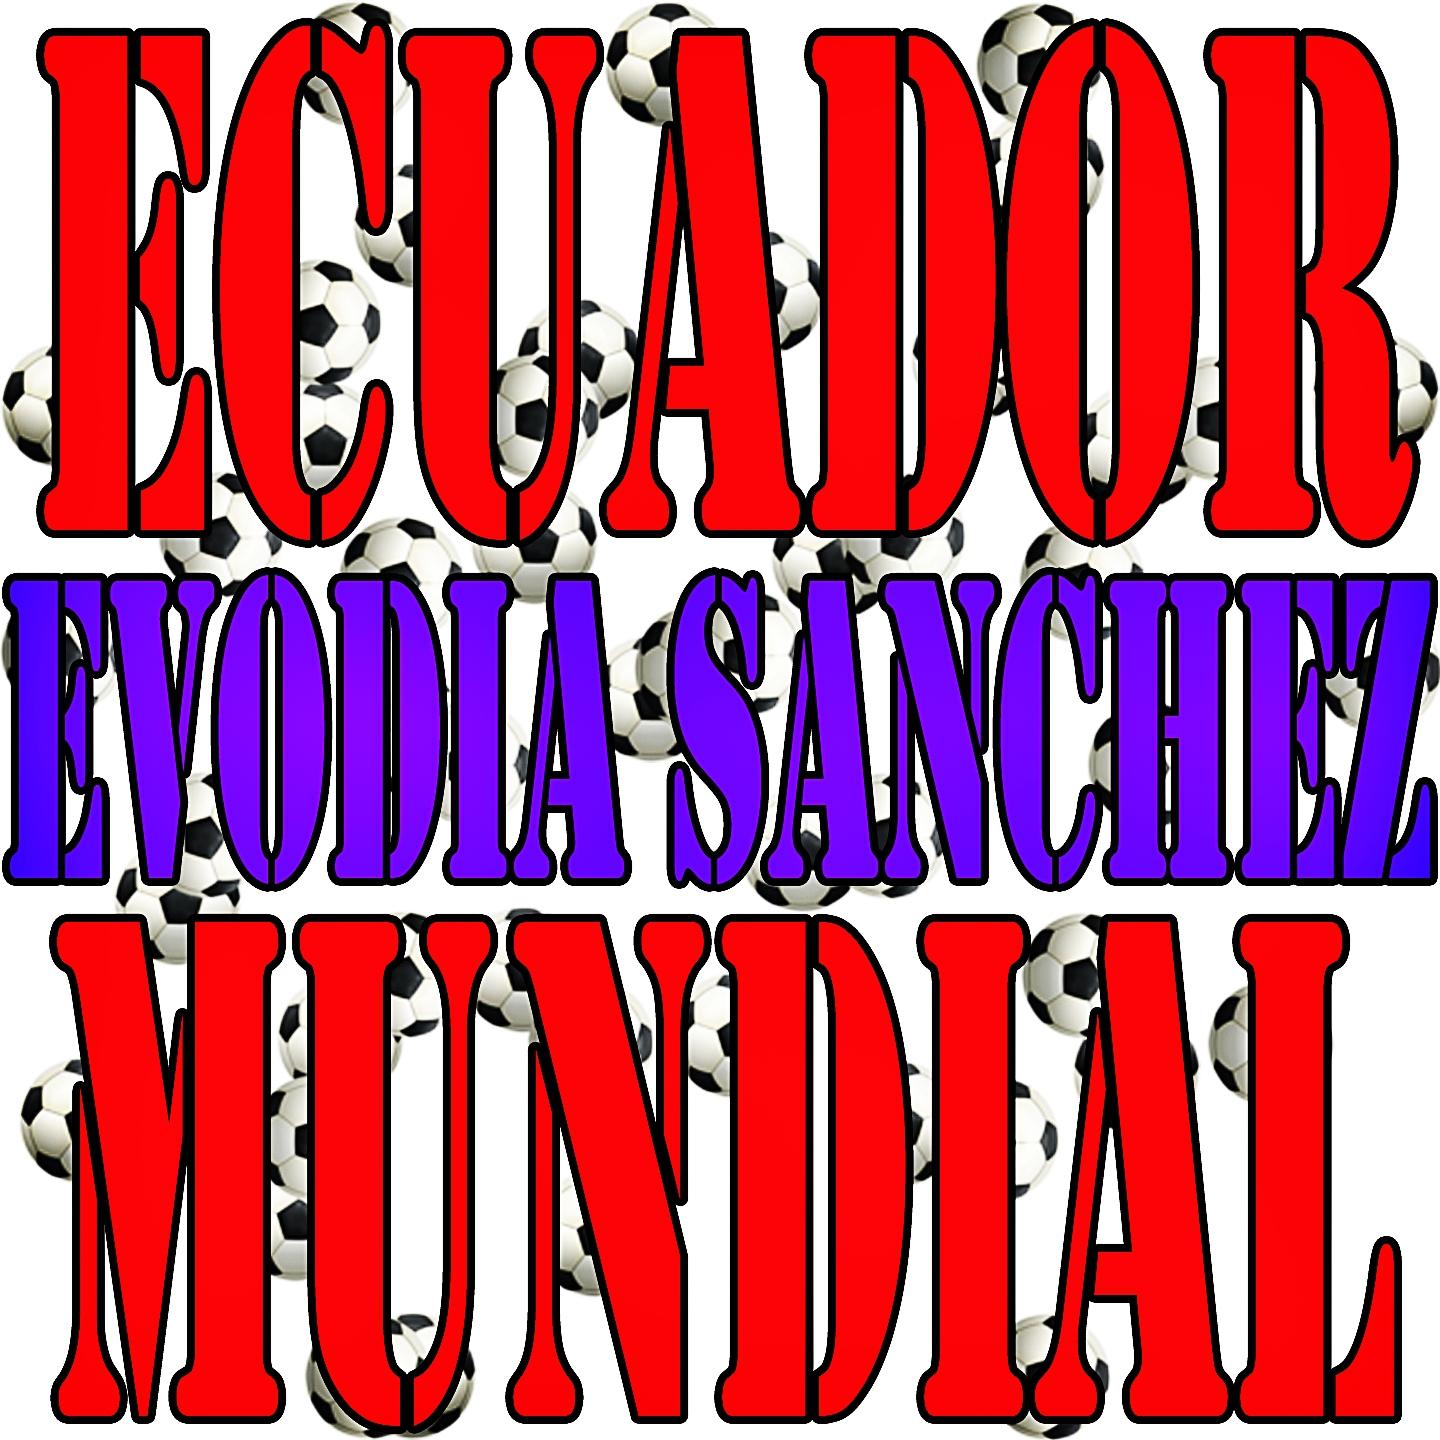 Ecuador Mundial专辑